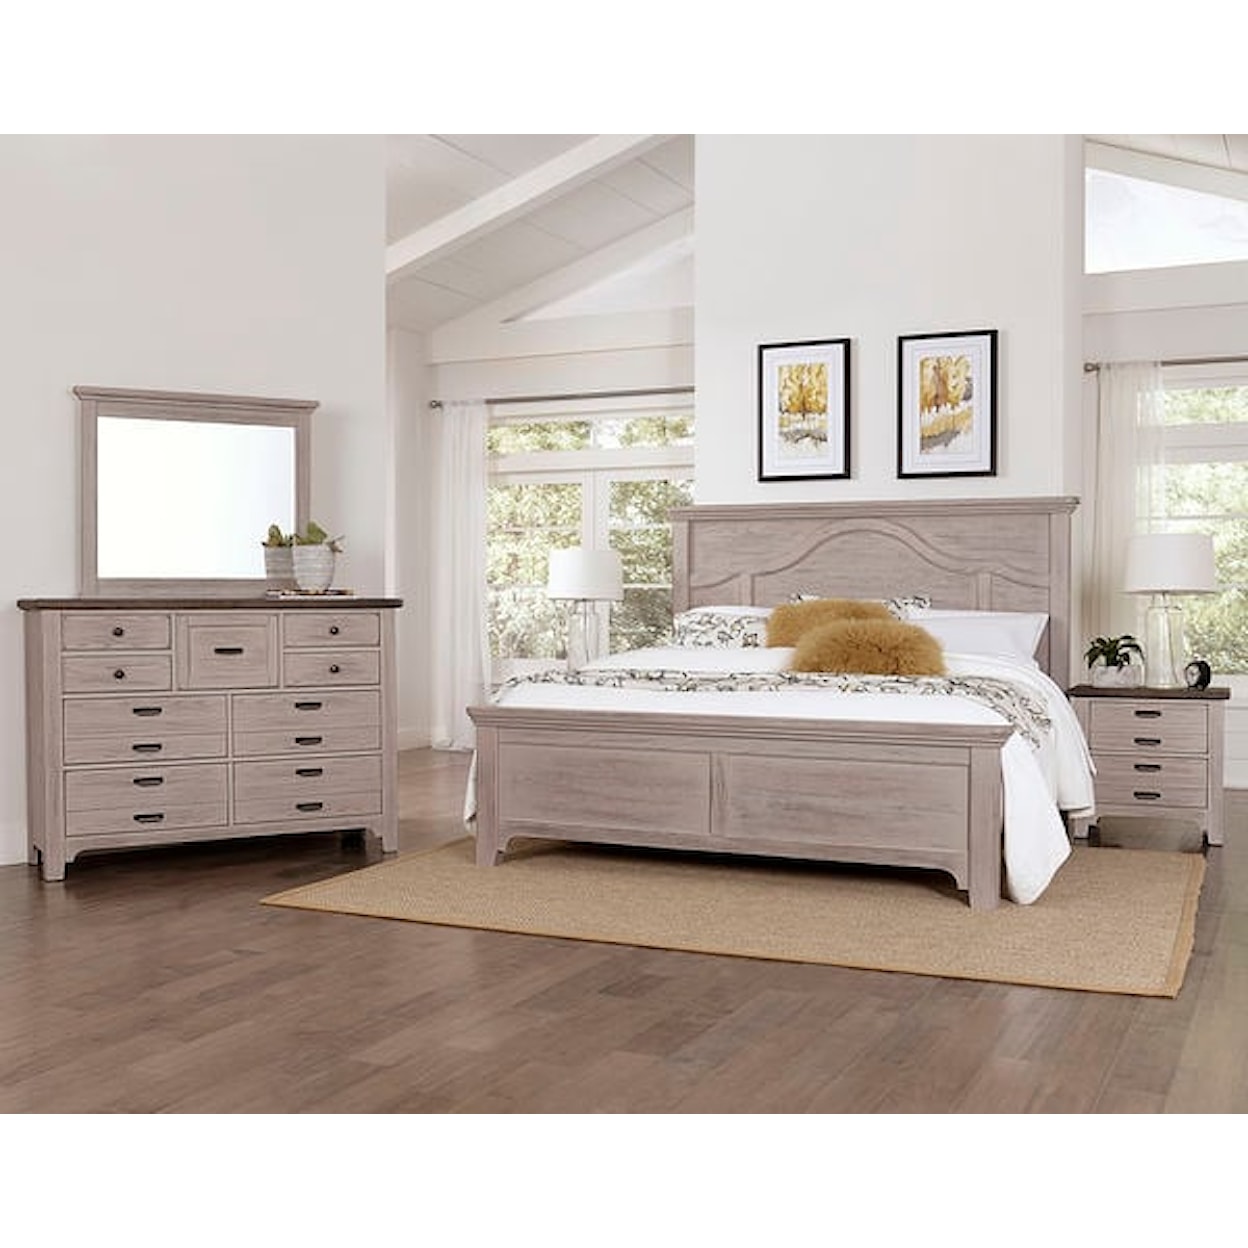 Laurel Mercantile Co. Bungalow King Bedroom Dover Grey Mantel Bed